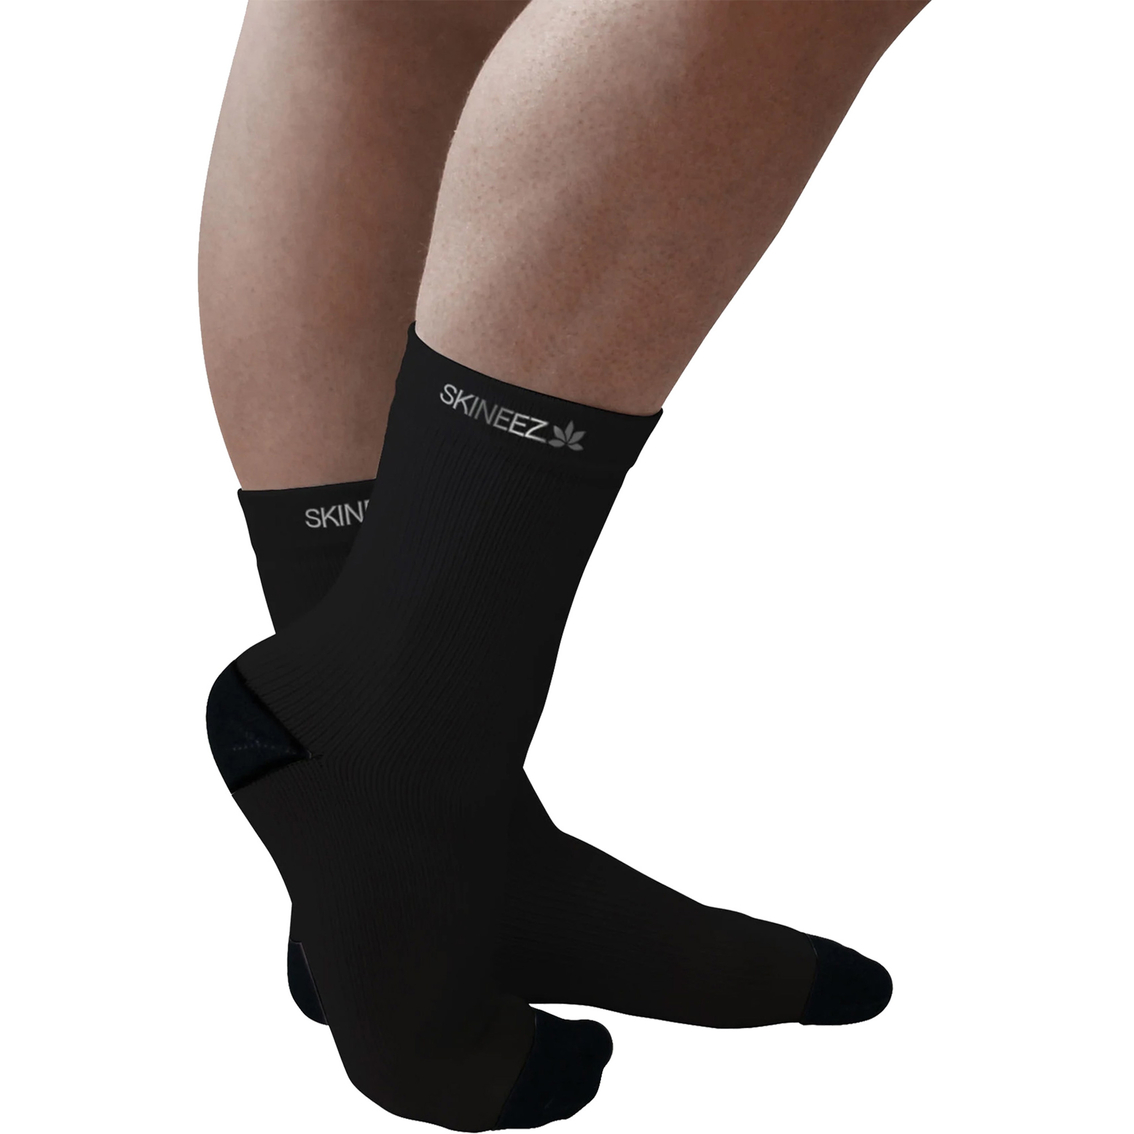 Skineez Sport Advanced Healing Compression Plus Crew Socks - Image 2 of 2